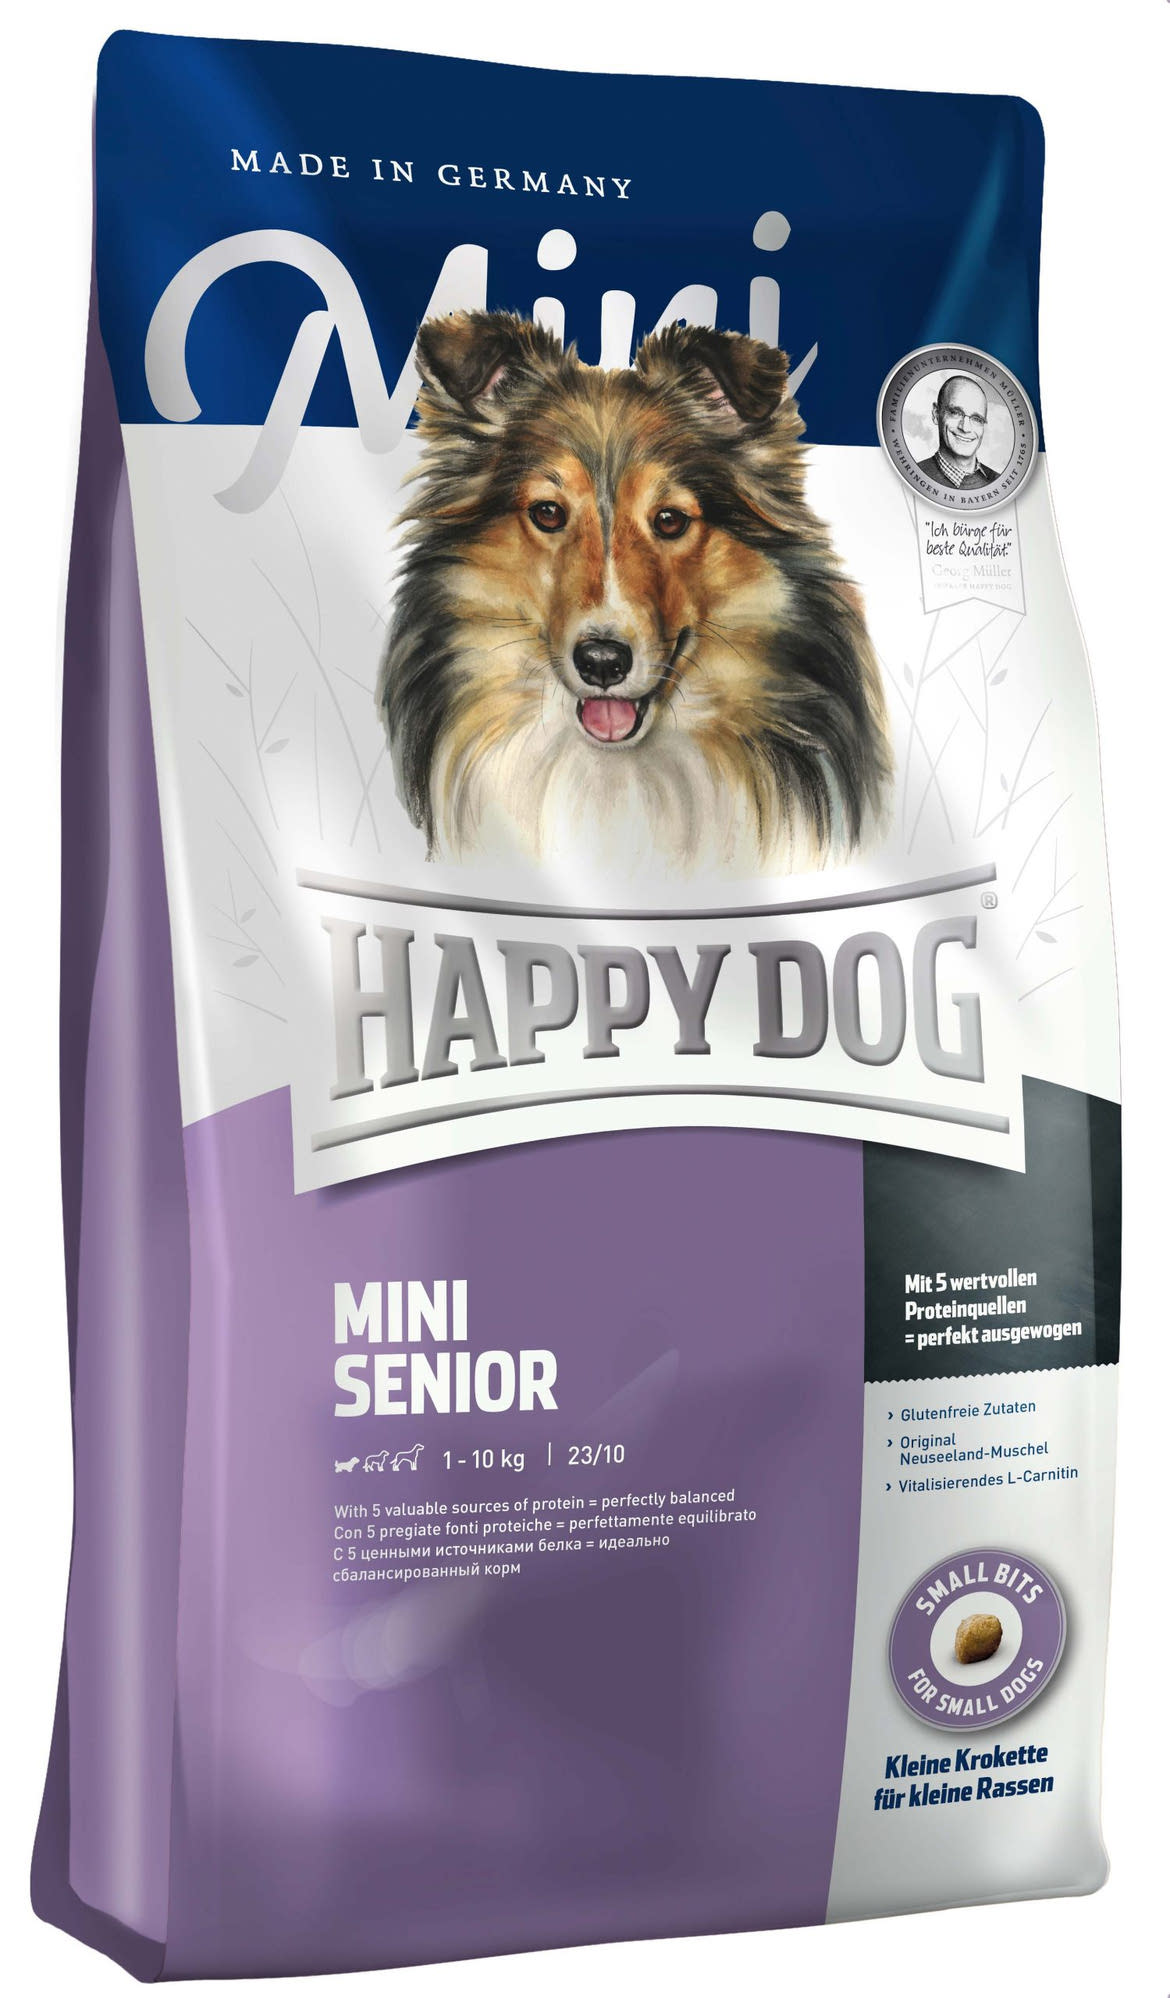 Happy Dog kutya szárazeledel mini senior